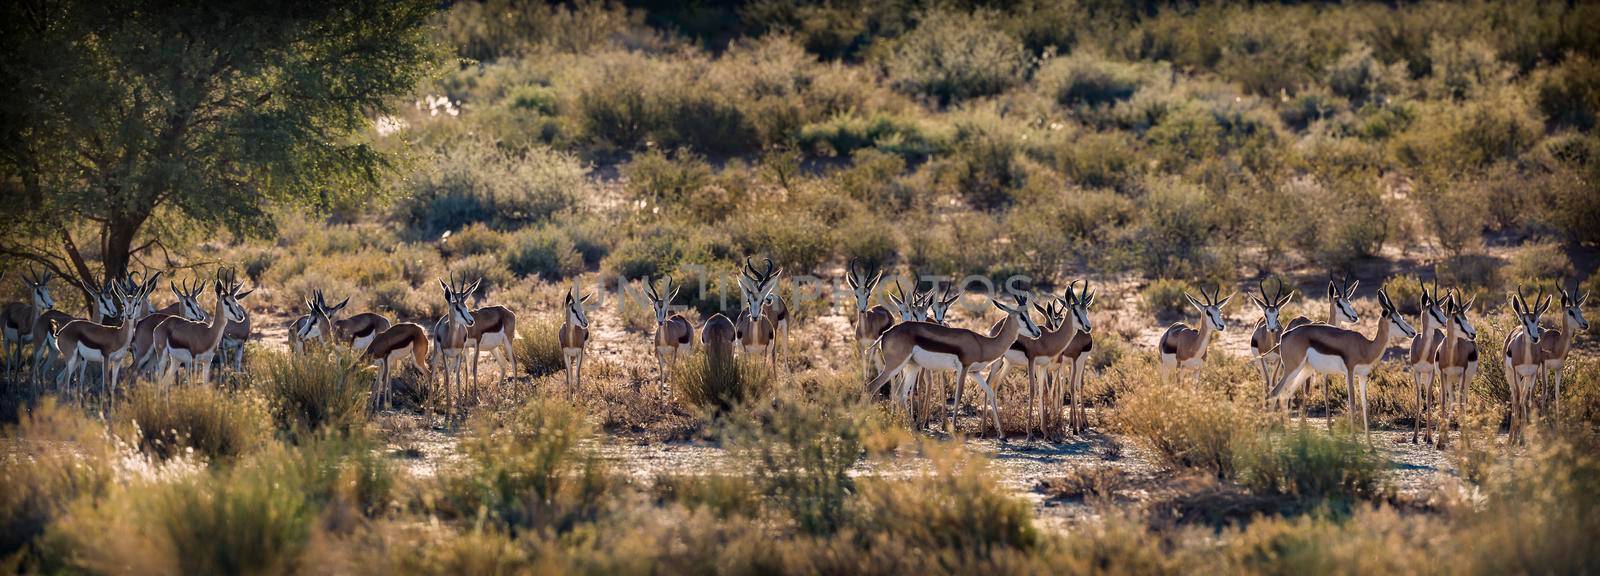 Springbok herd standing in backlit in Kgalagari transfrontier park, South Africa ; specie Antidorcas marsupialis family of Bovidae